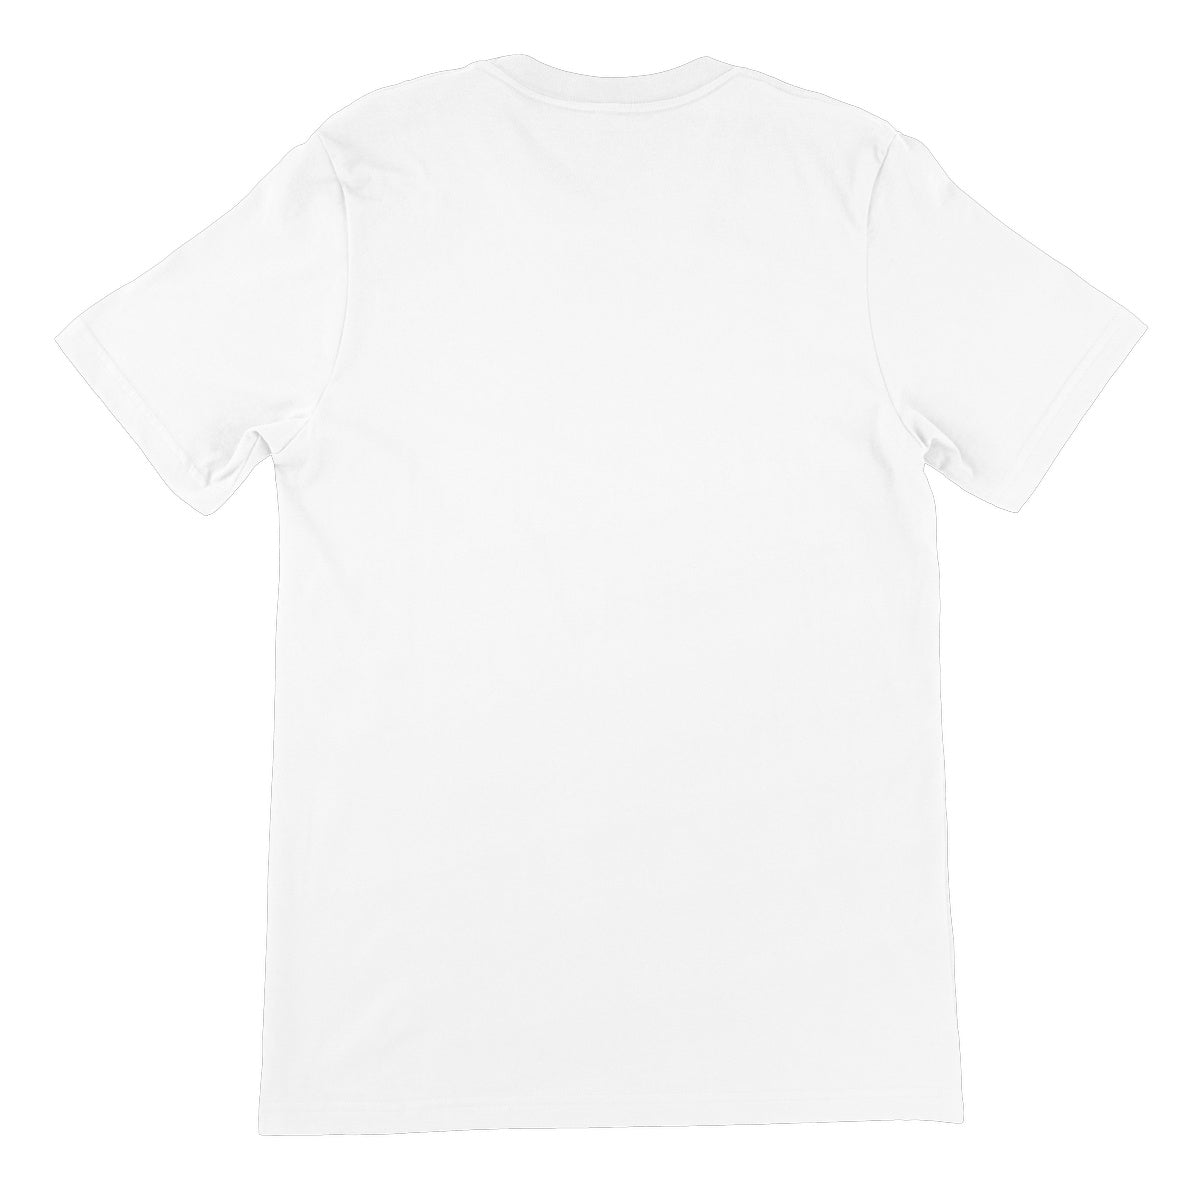 Aliens Illustrated Tee Unisex Short Sleeve T-Shirt